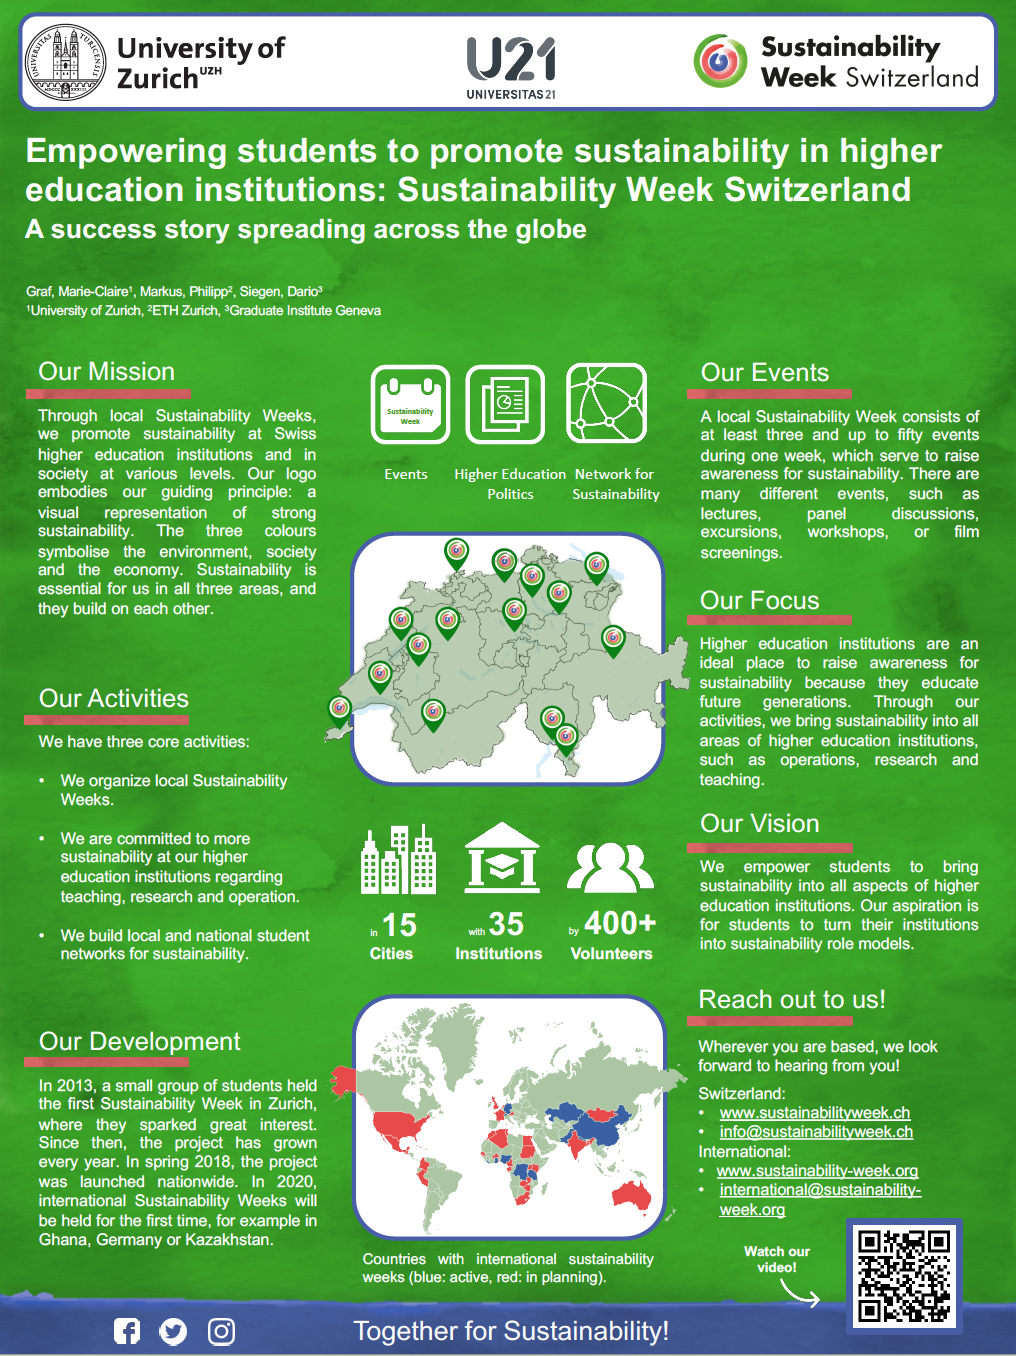 Empowering Students to Promote Sustainability in Higher Education Institutions: Sustainability Week Switzerland - Marie-Claire Graf, Philipp Markus, Dario Siegen